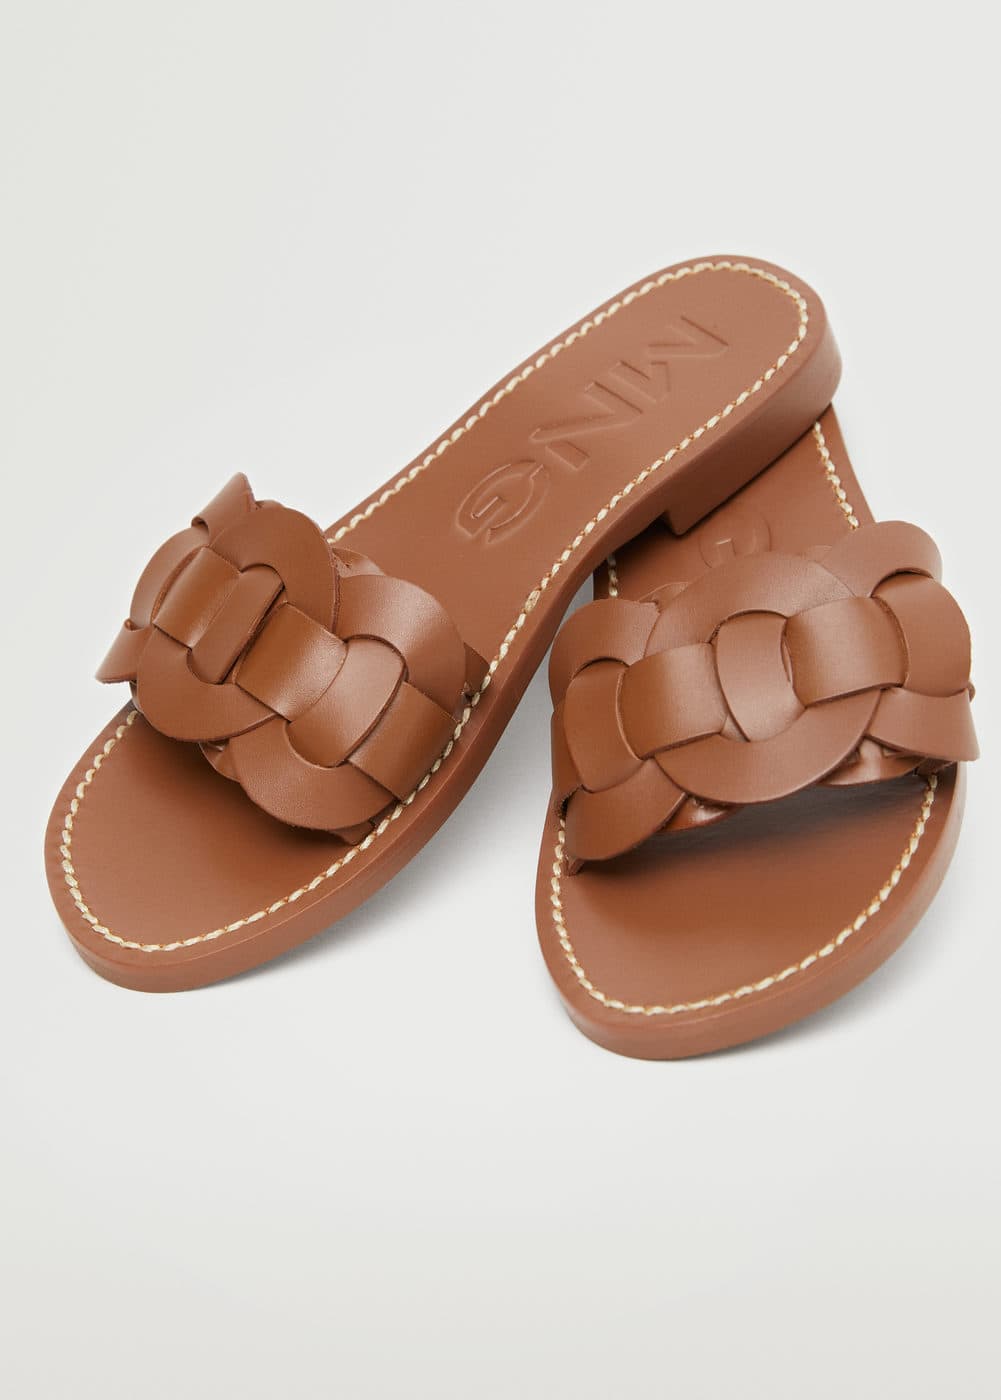 Mango Leather Braided Sandals